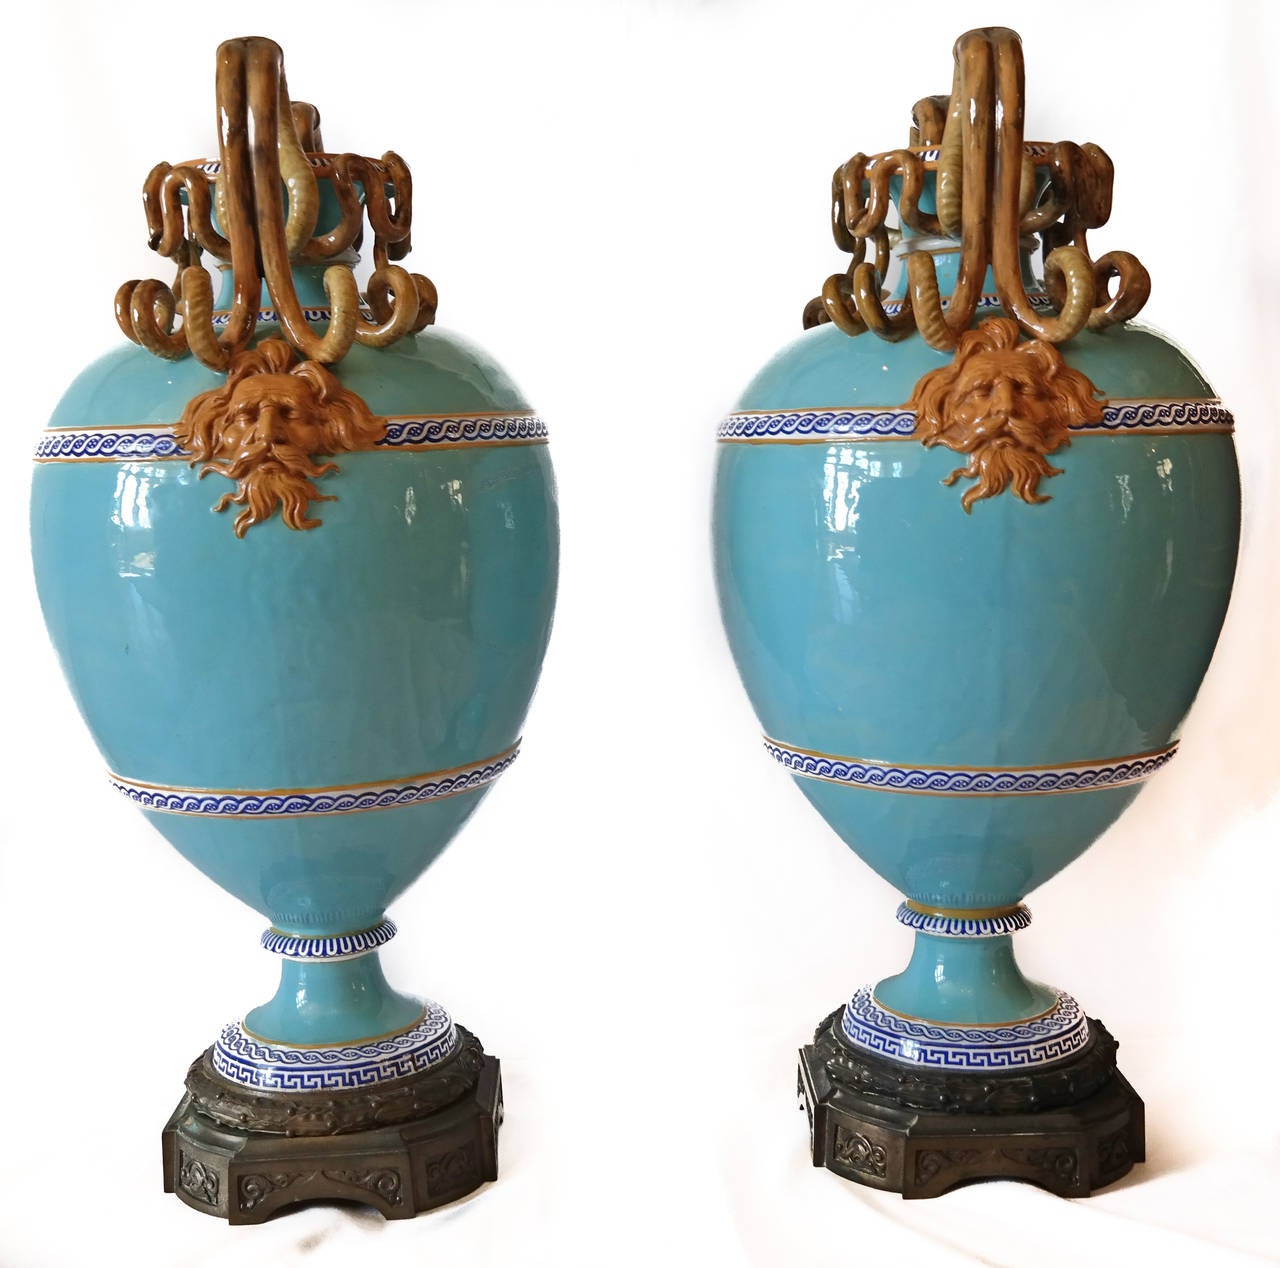 Large pair of bronze-mounted Minton Majolica vases, designed for Minton by professor Gottfried Semper (1803-1879) from the estate of legendary decorator and taste maker, Madeline Castaing.